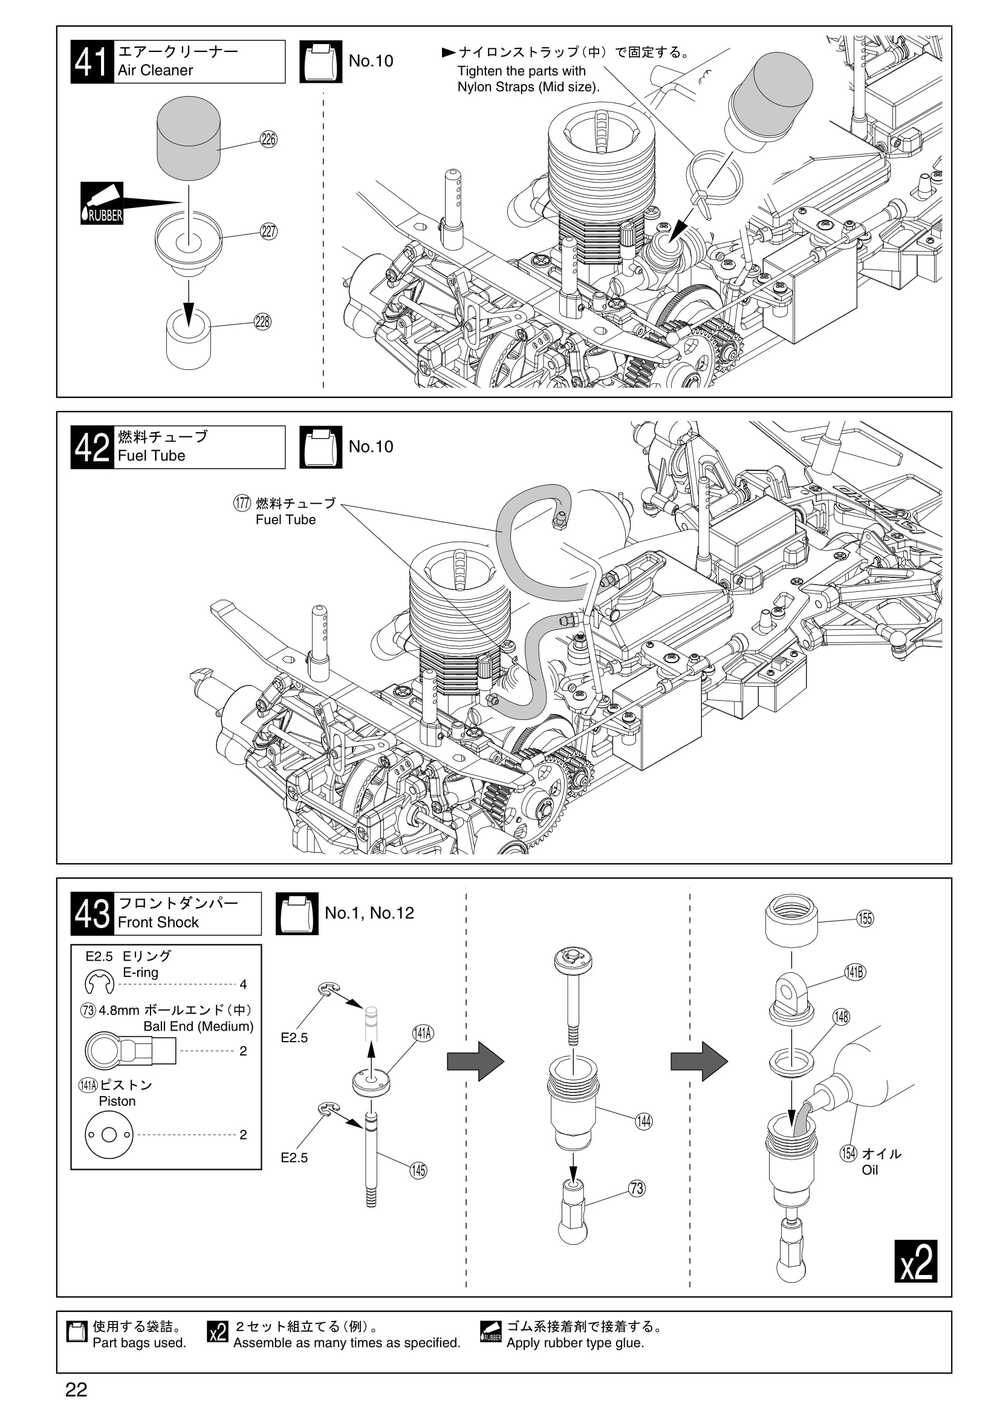 Kyosho - 31041 - Fantom Sports - Manual - Page 22